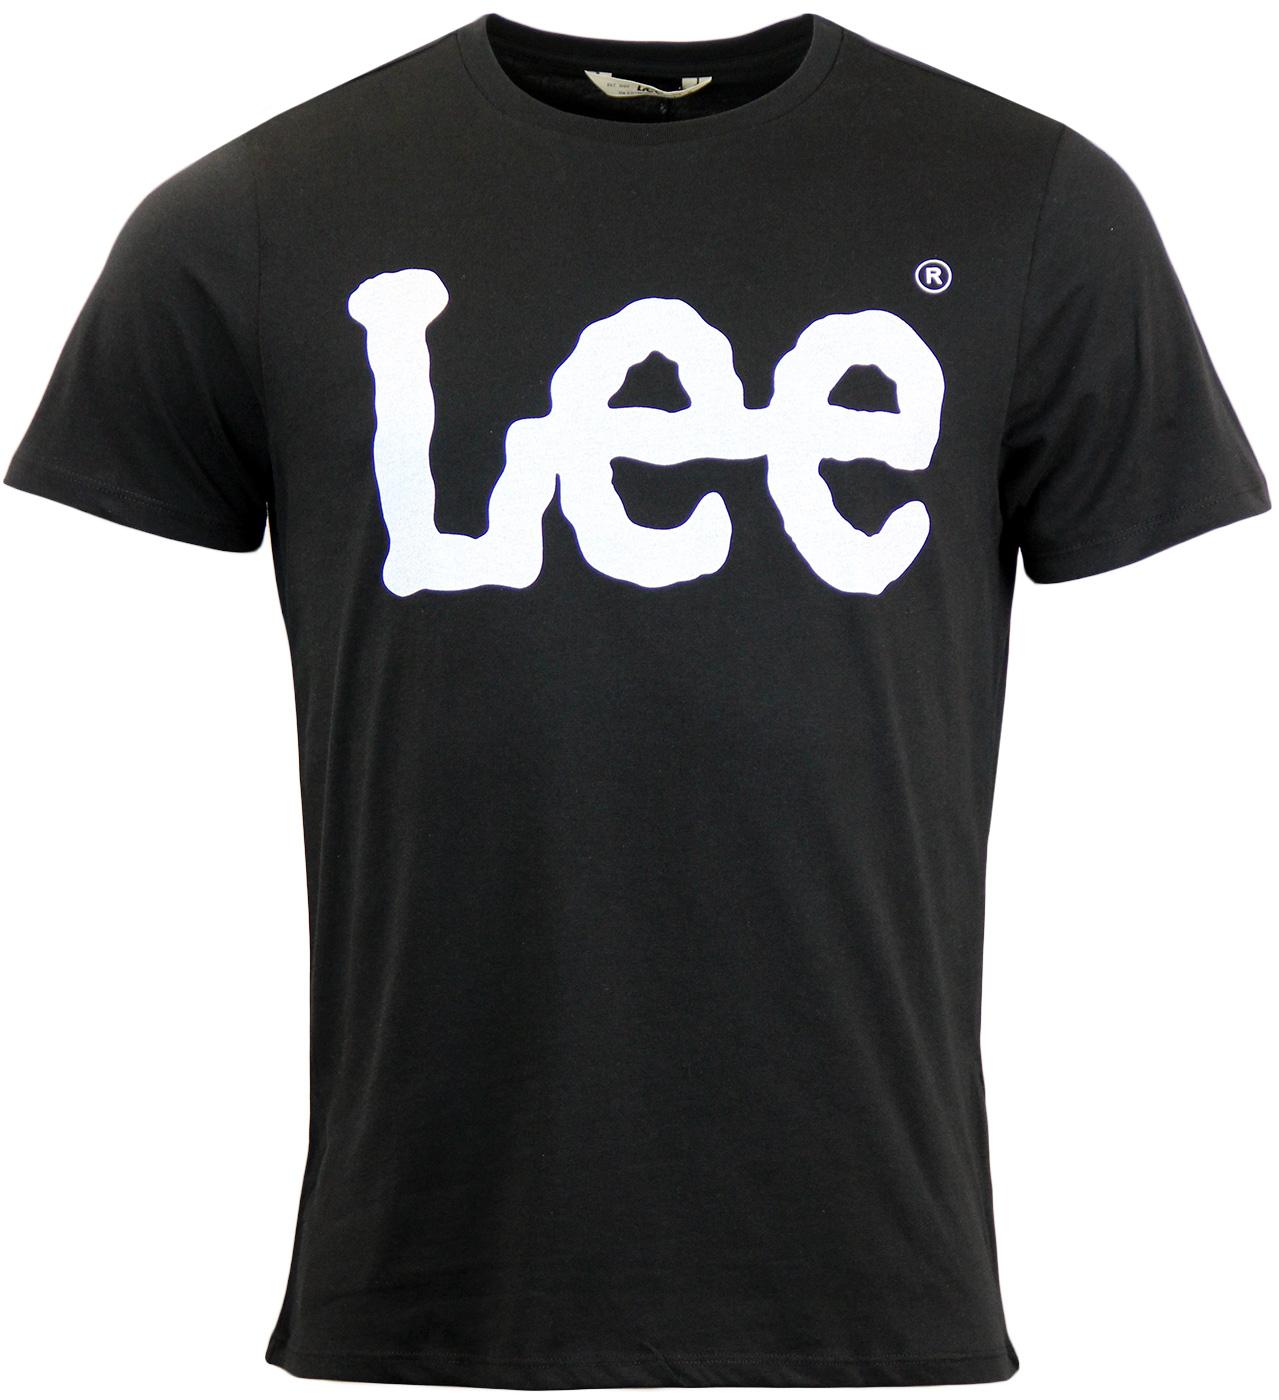 LEE JEANS Retro 70s Classic Logo Crew Neck T-shirt